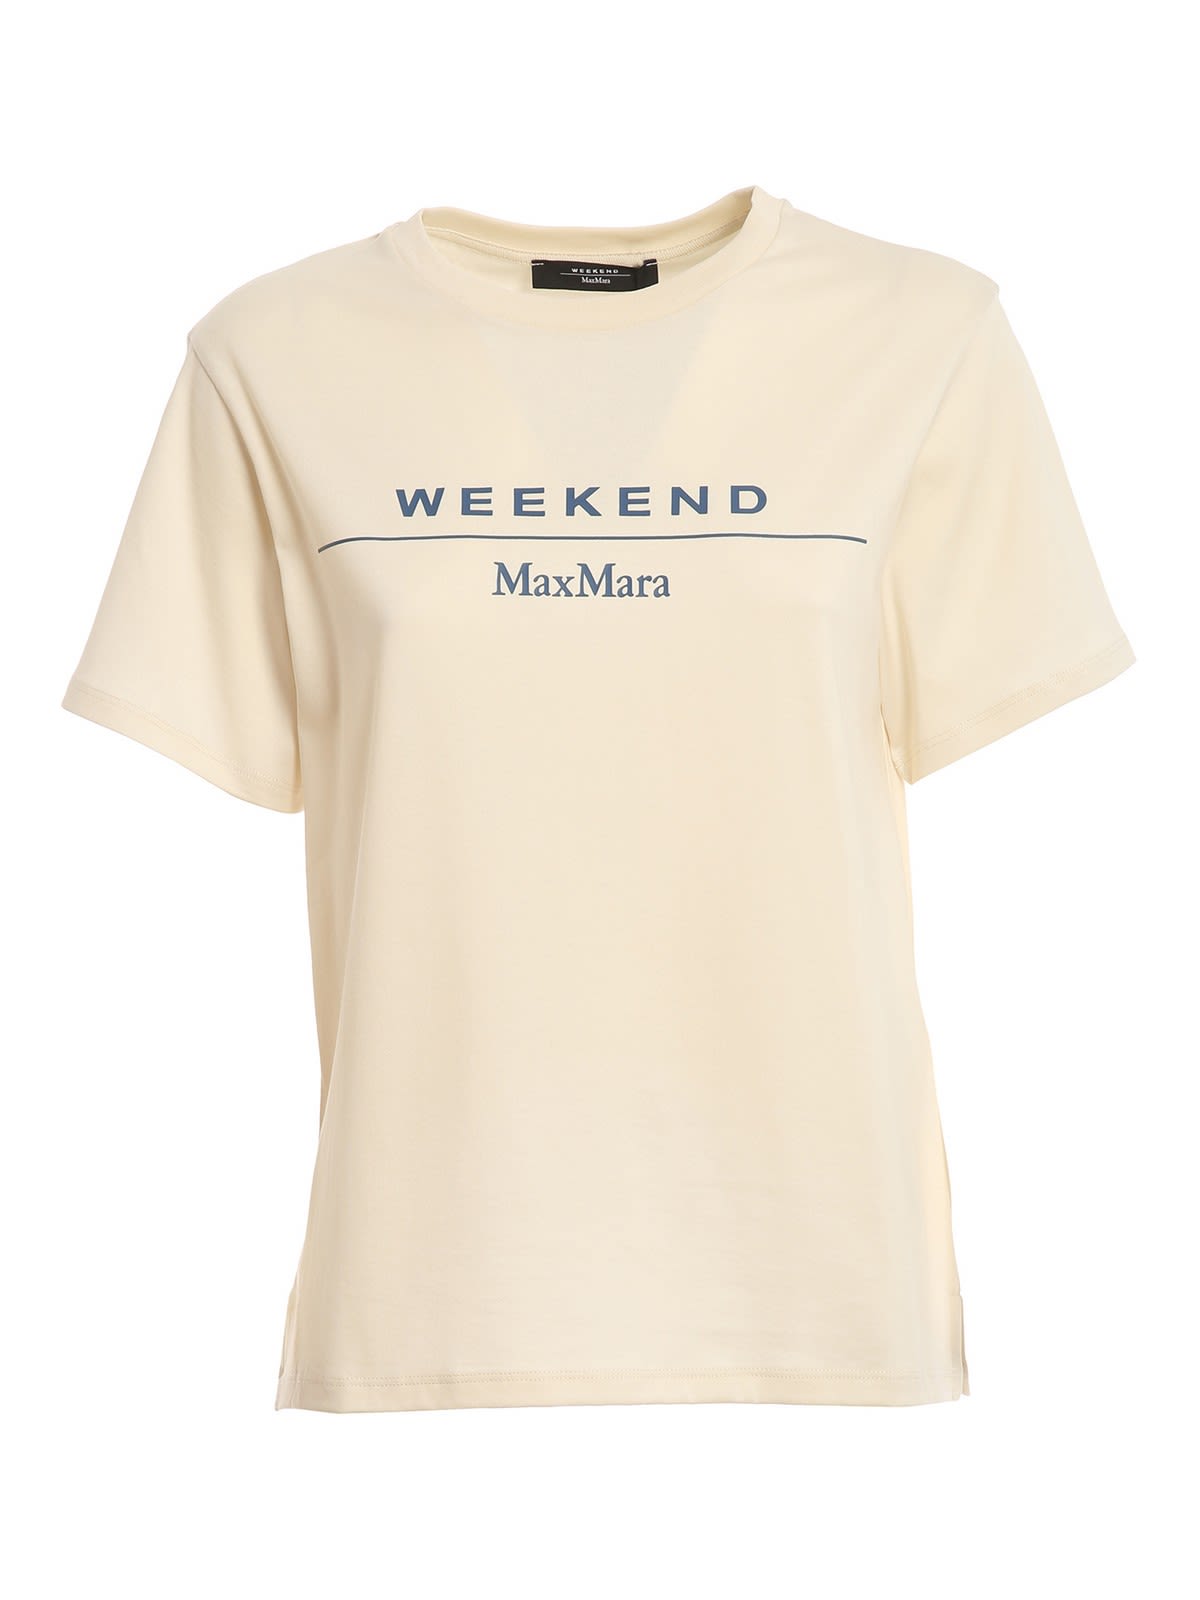 Weekend Max Mara T-shirt pittore Crema 59710221600012